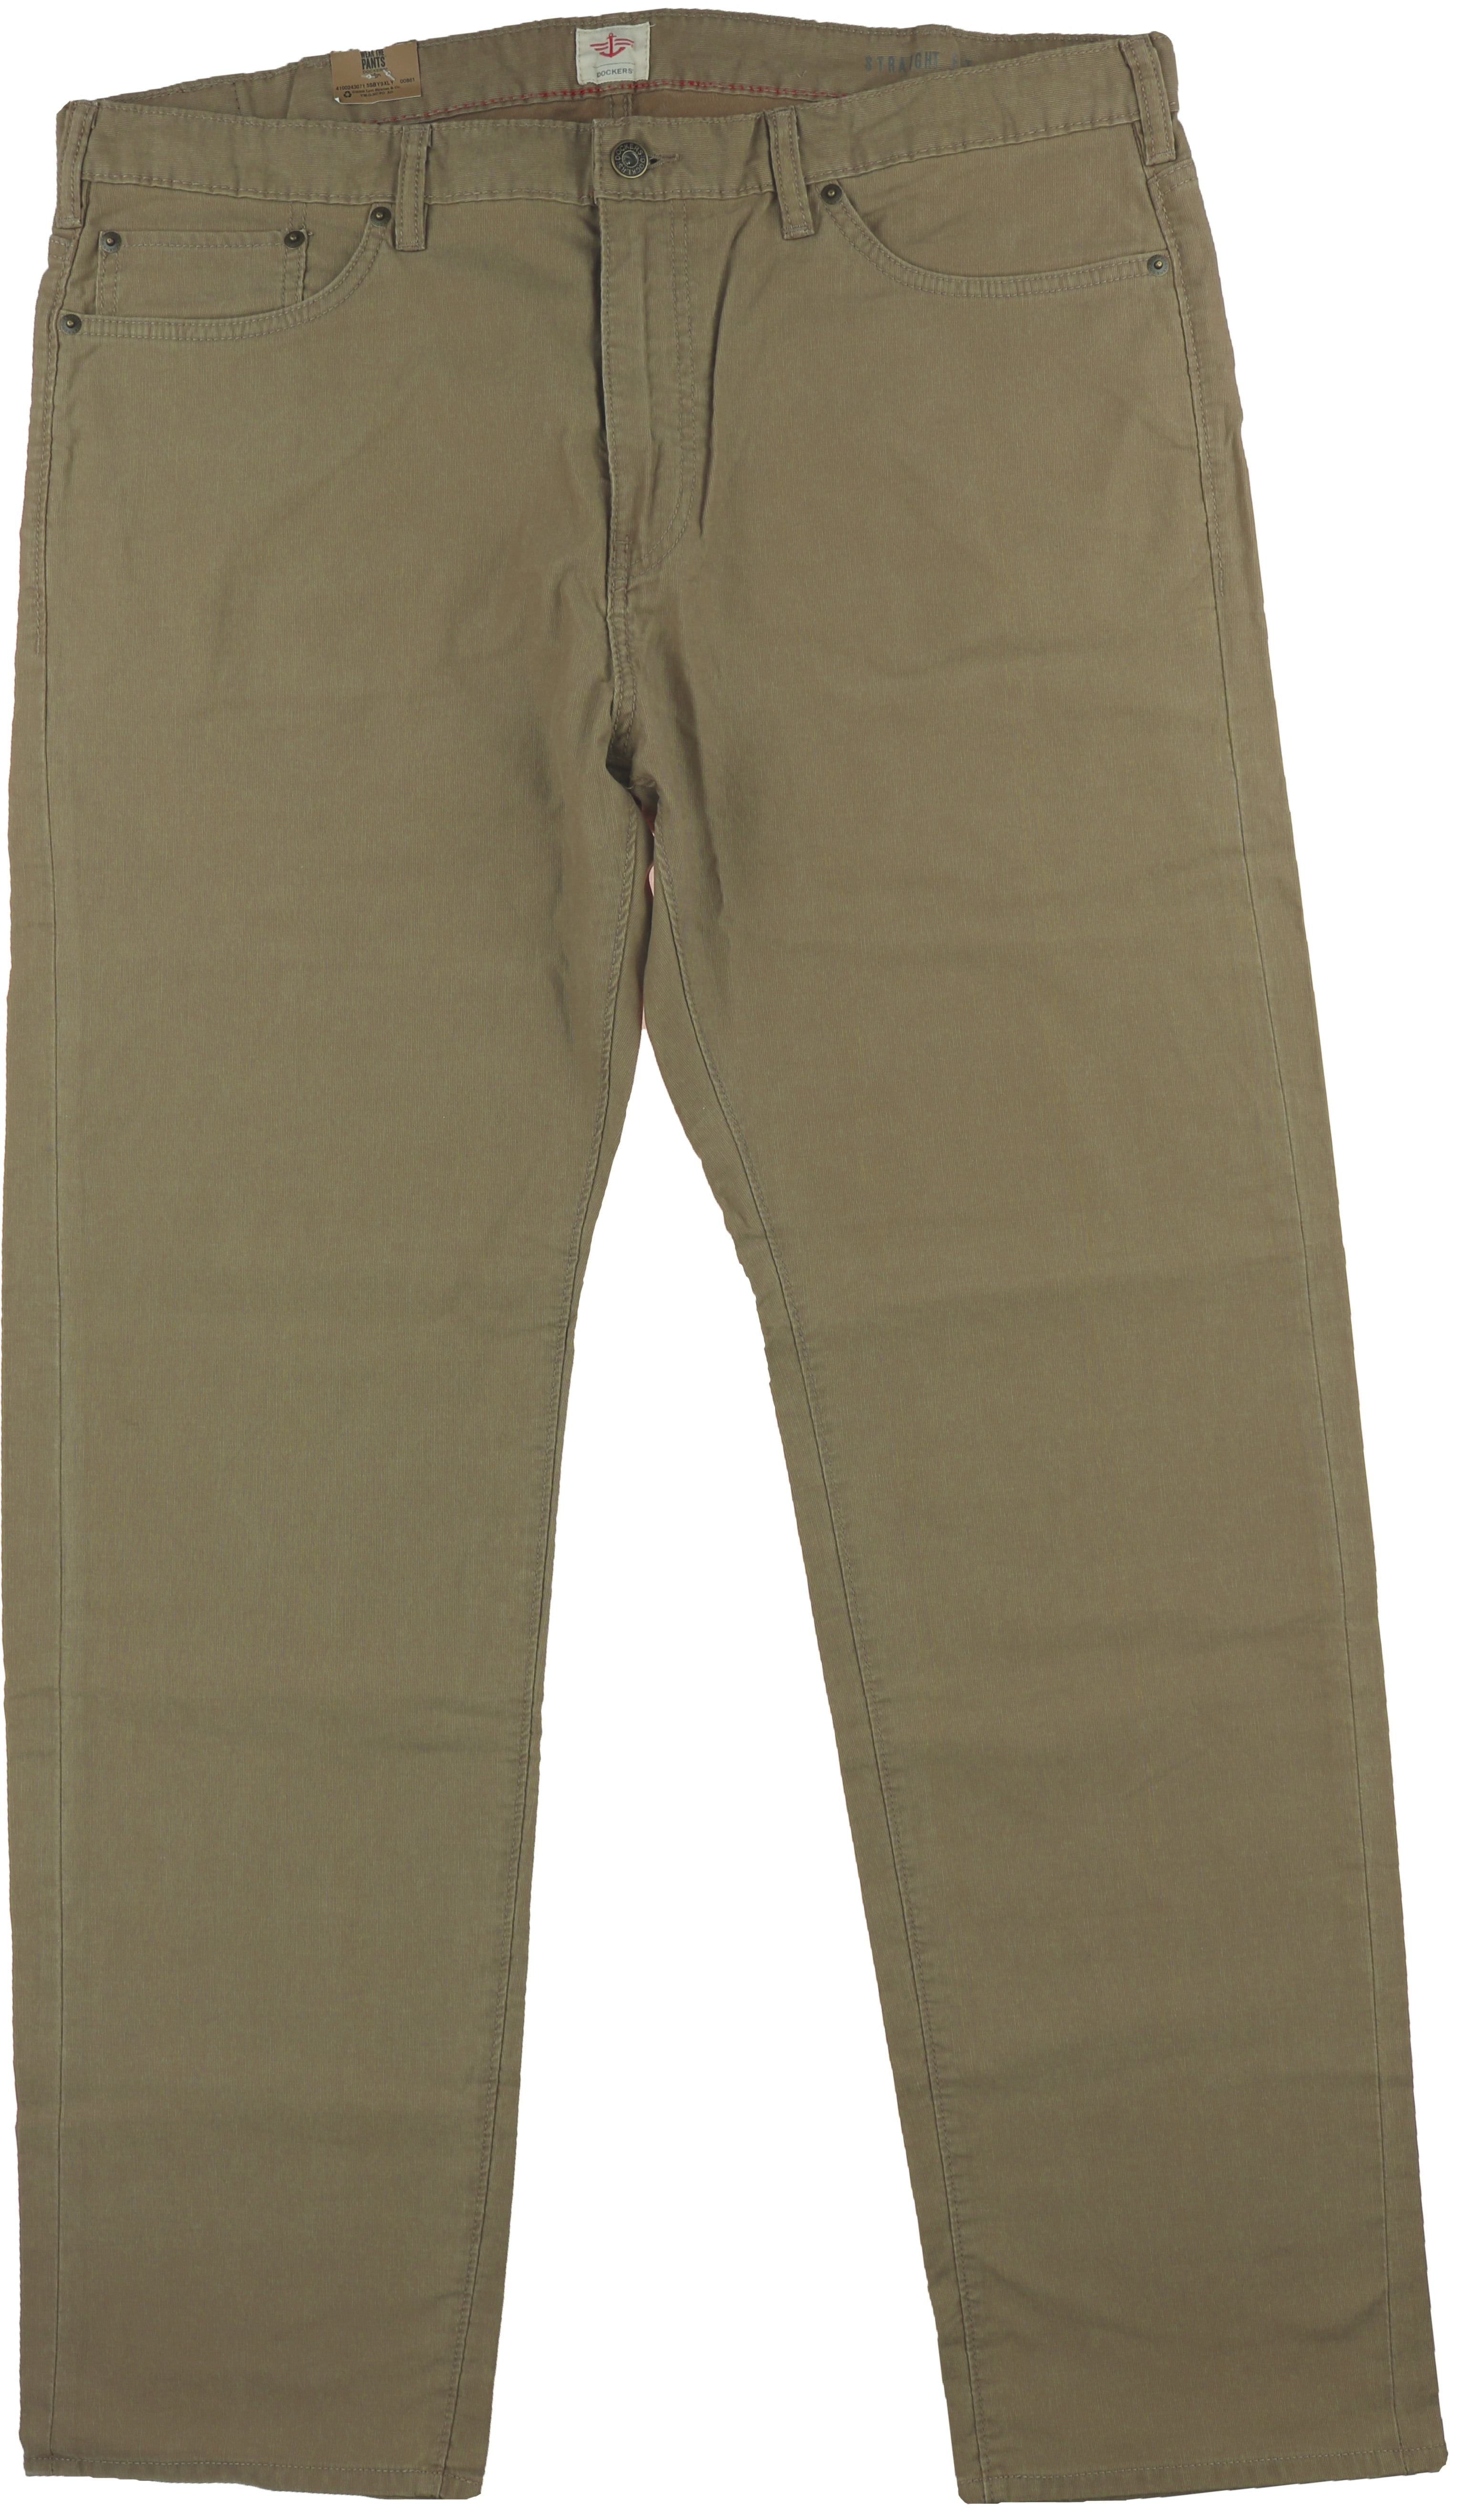 zonlicht Wat mensen betreft Lyrisch Dockers Pacific Collection Mens 5-Pocket Straight Fit Pants (Khaki, 36X32)  - Walmart.com